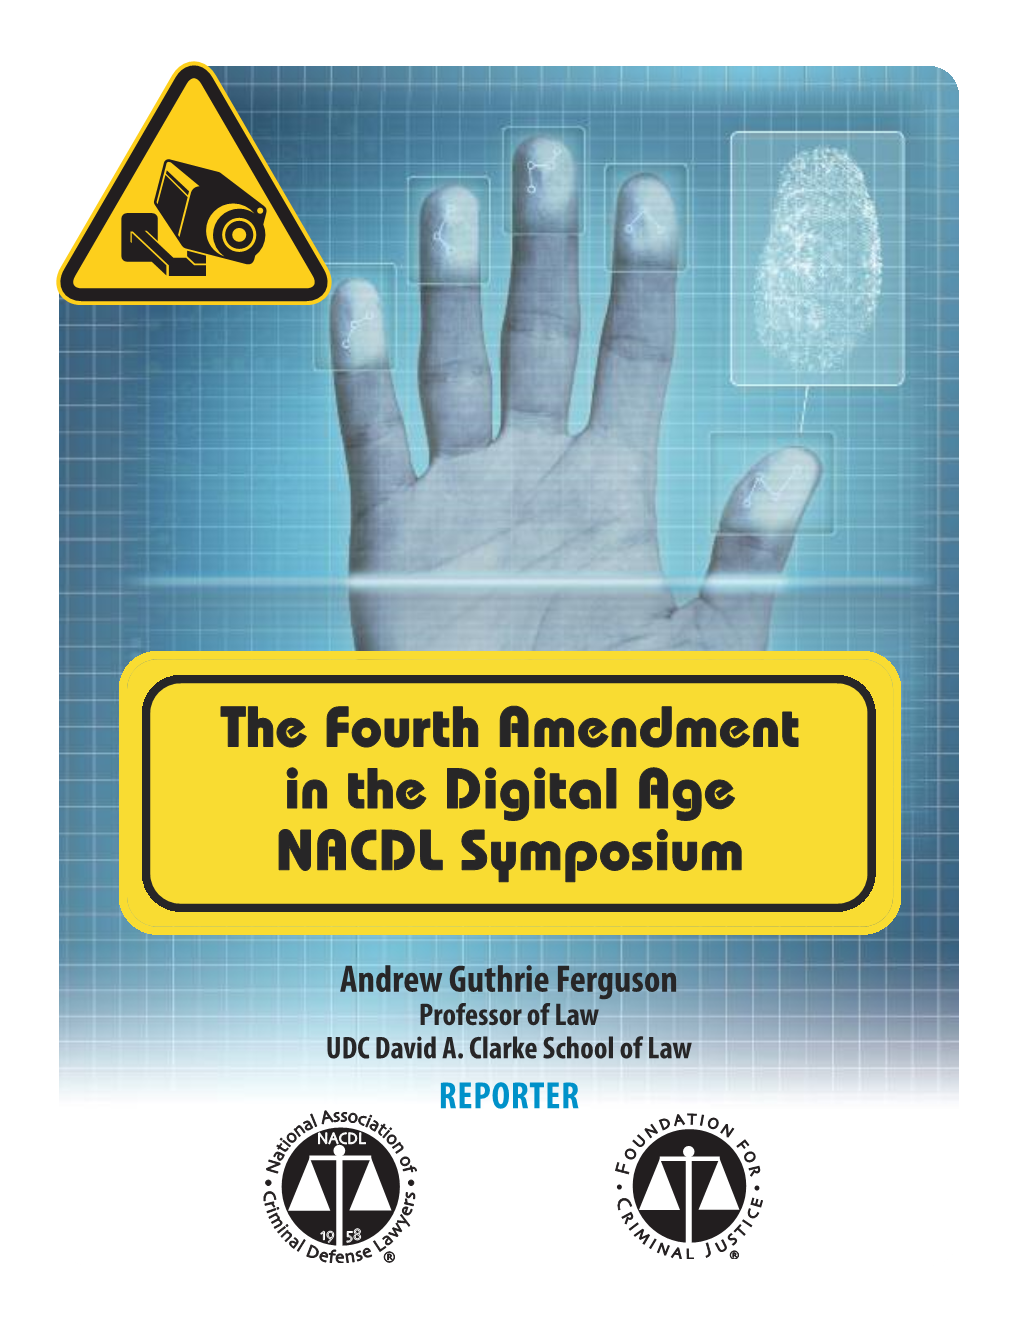 The Fourth Amendment in the Digital Age NACDL Symposium